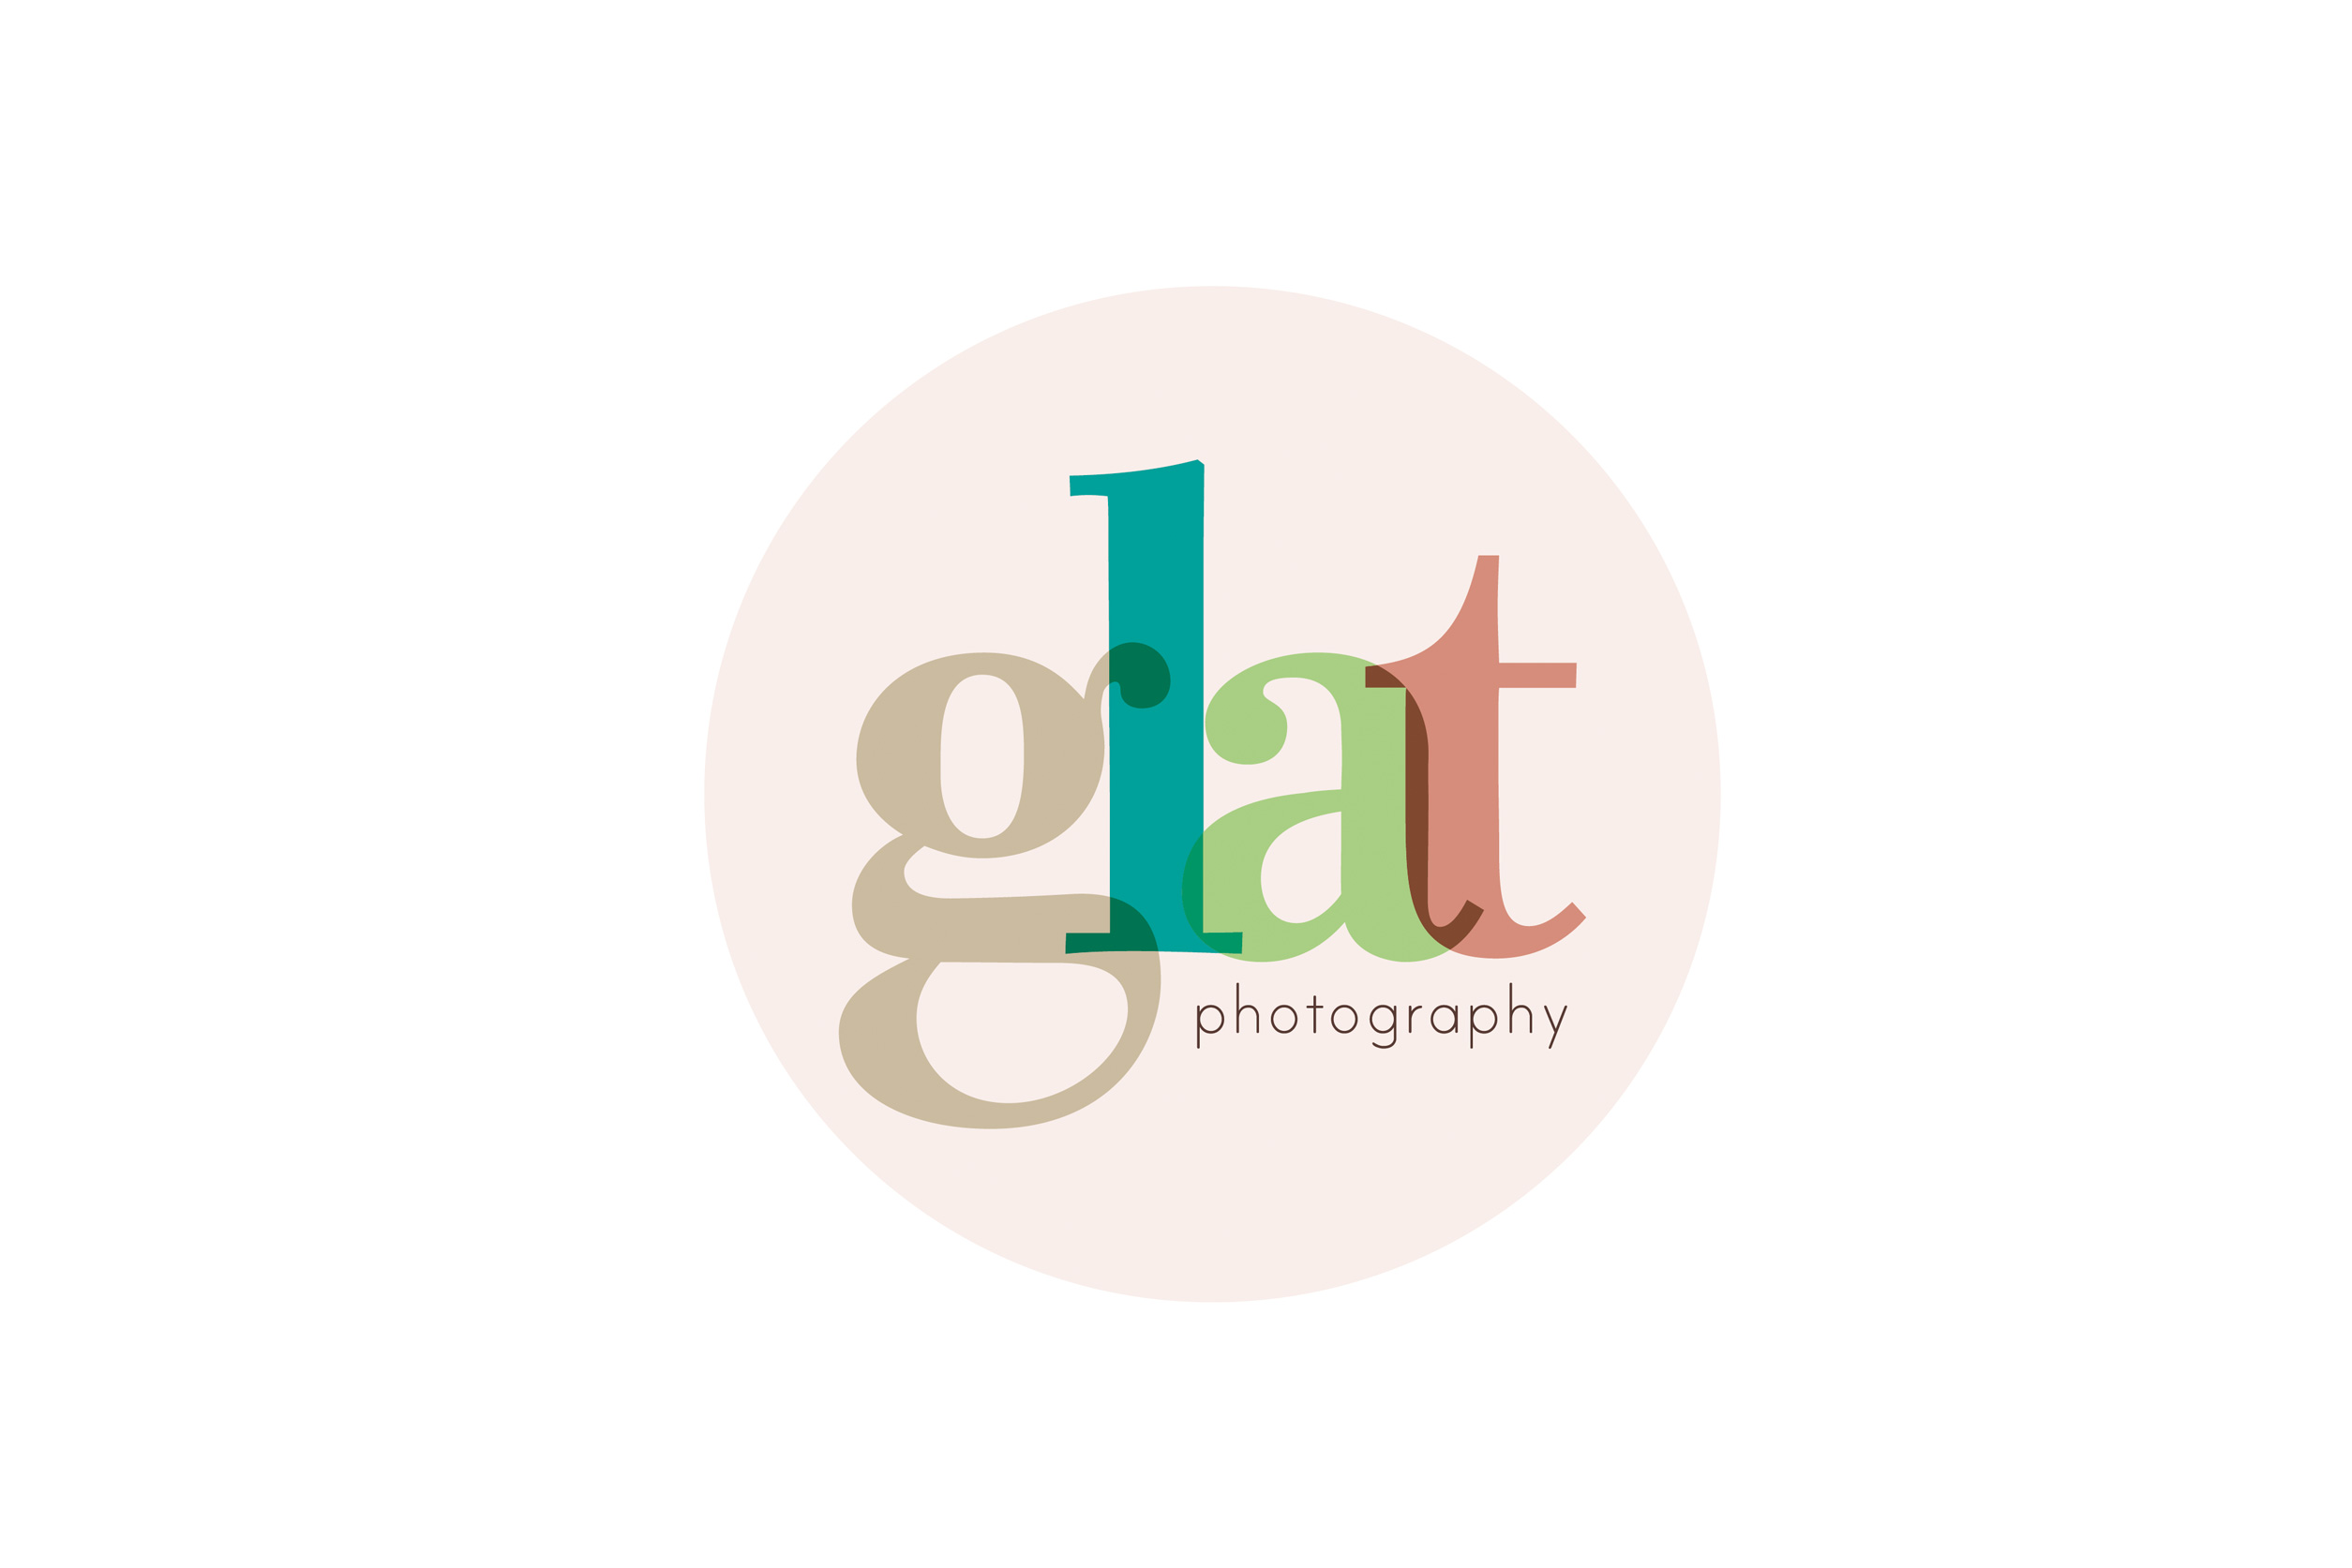 glat_logo